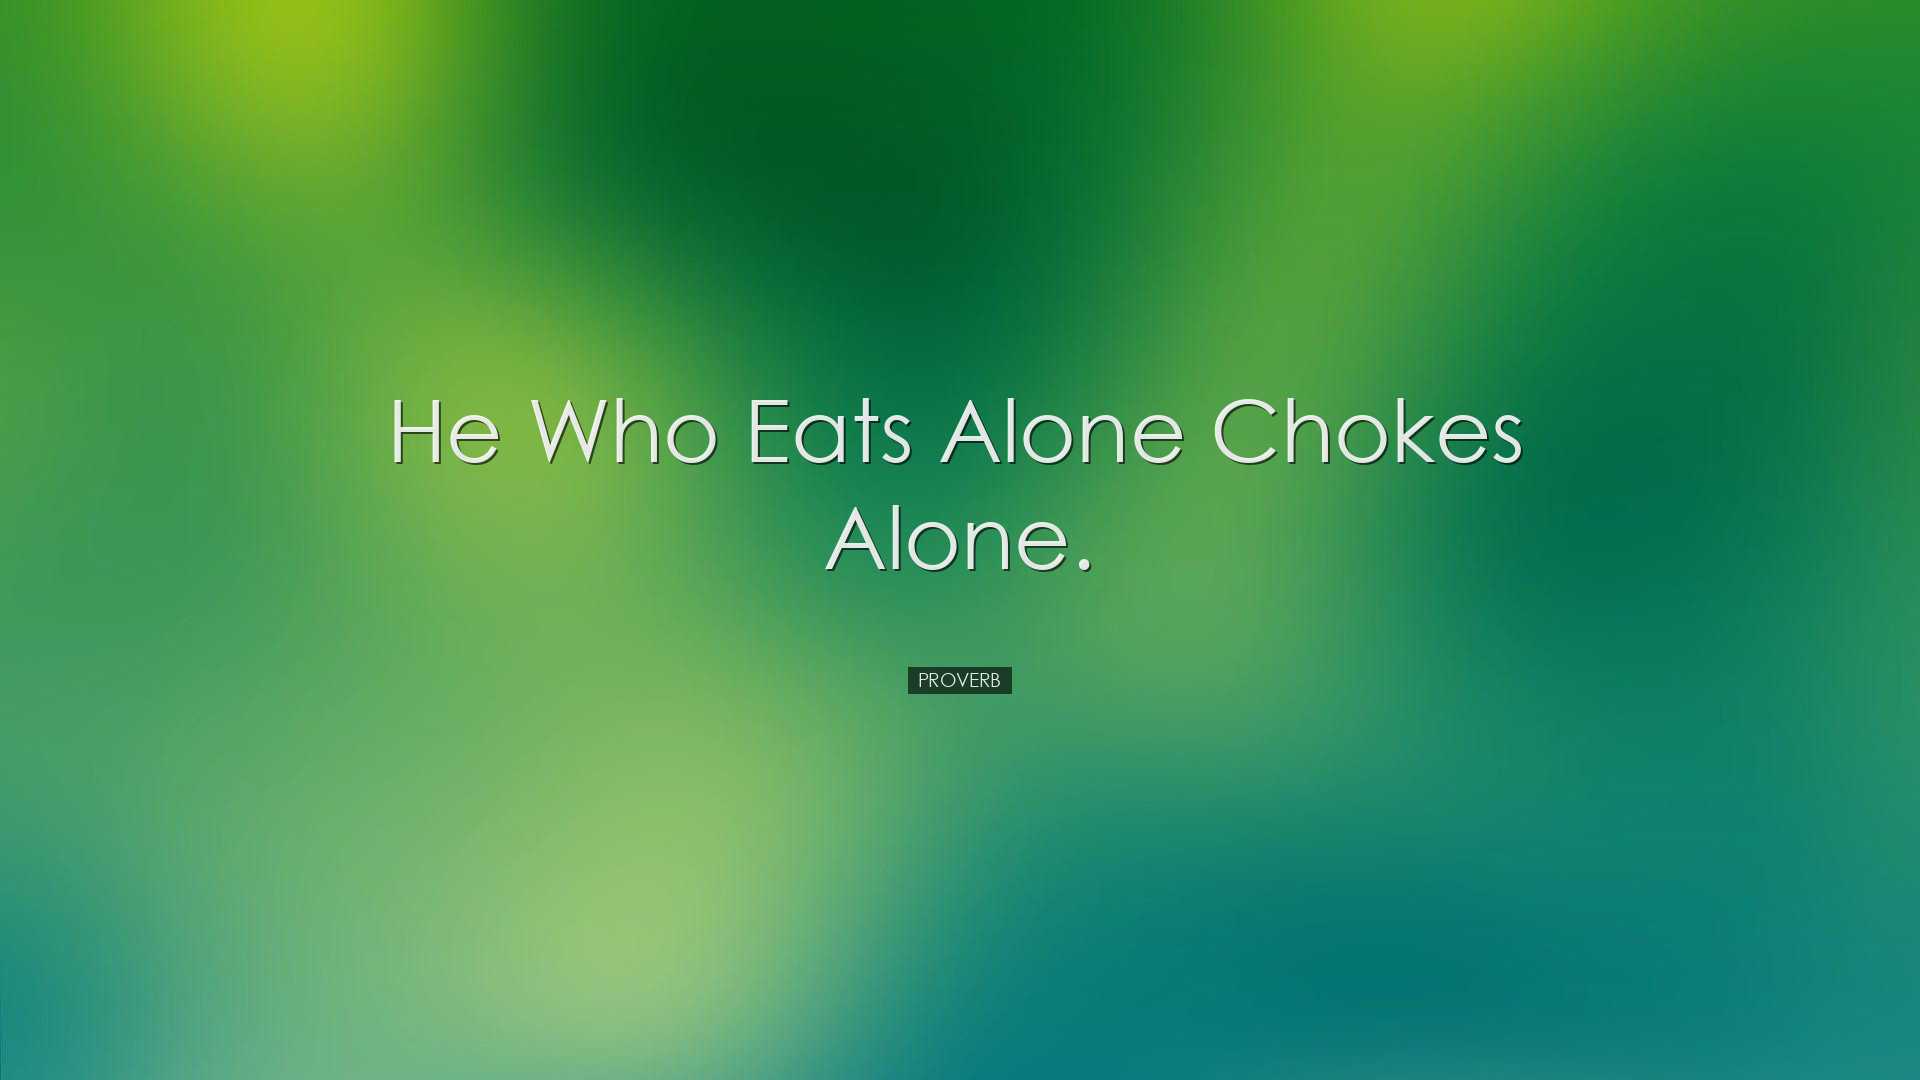 He who eats alone chokes alone. - Proverb